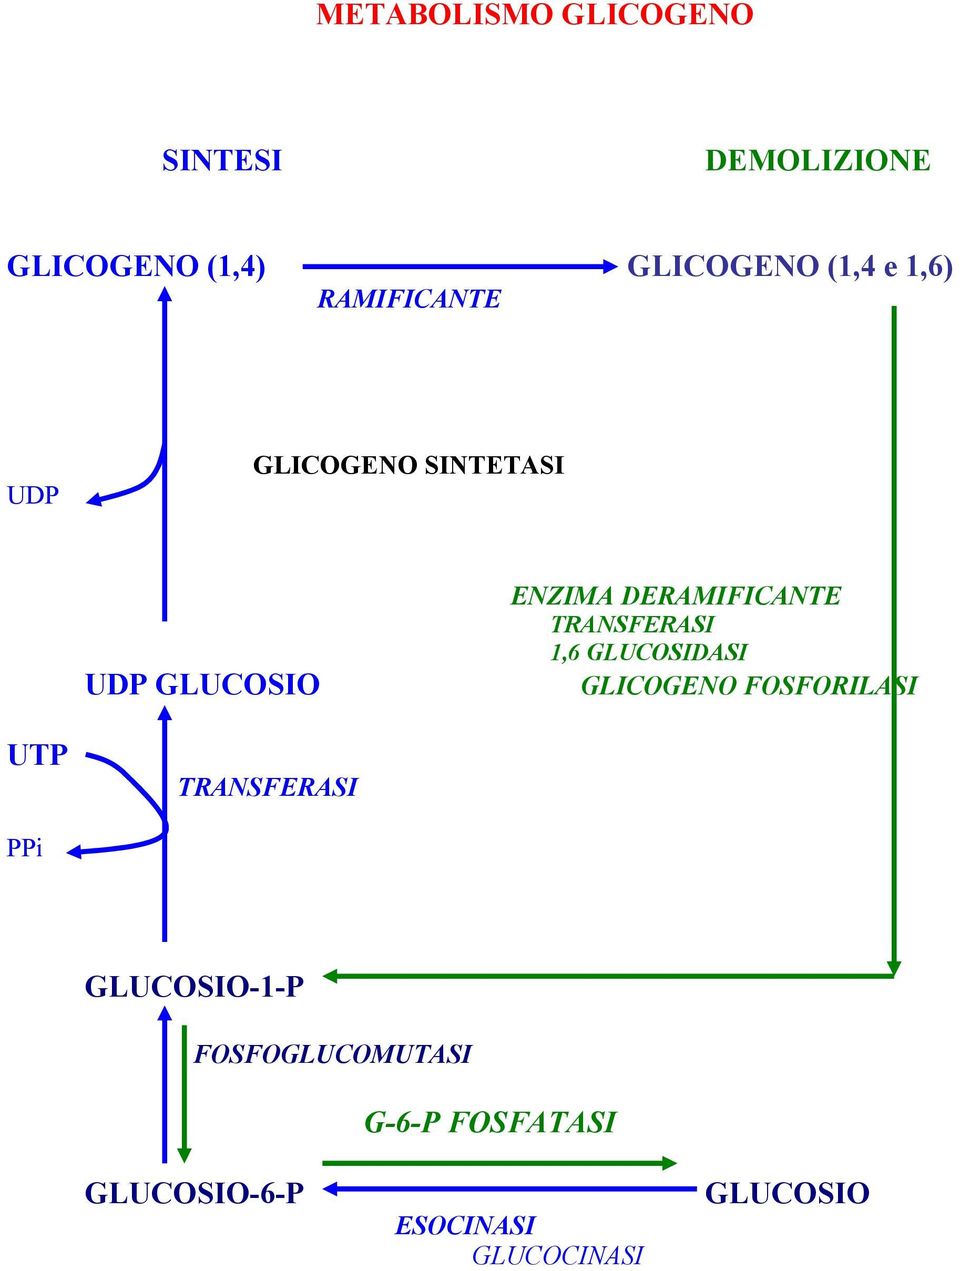 TRANSFERASI 1,6 GLUCOSIDASI GLICOGENO FOSFORILASI UTP TRANSFERASI PPi